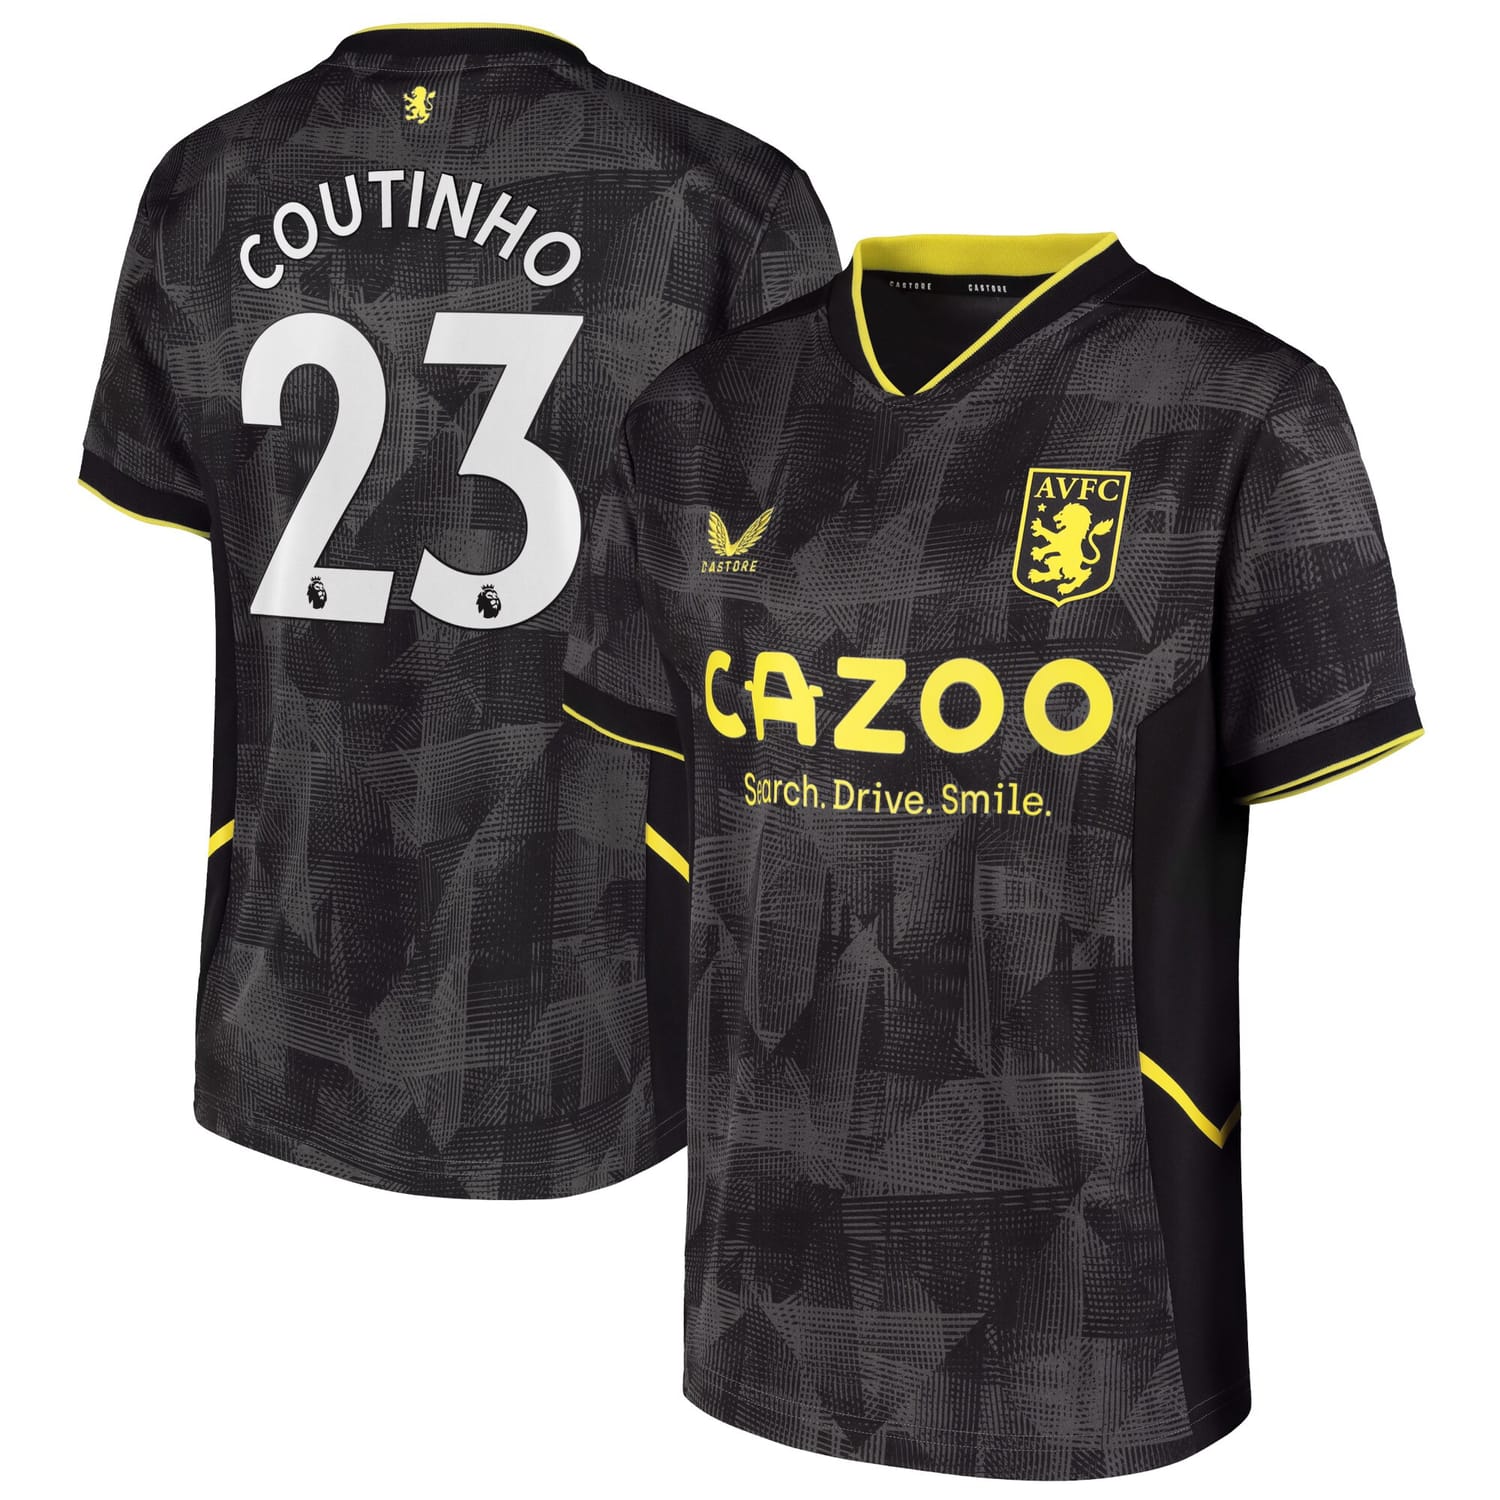 Premier League Aston Villa Third Jersey Shirt 2022-23 player Philippe Coutinho 23 printing for Men